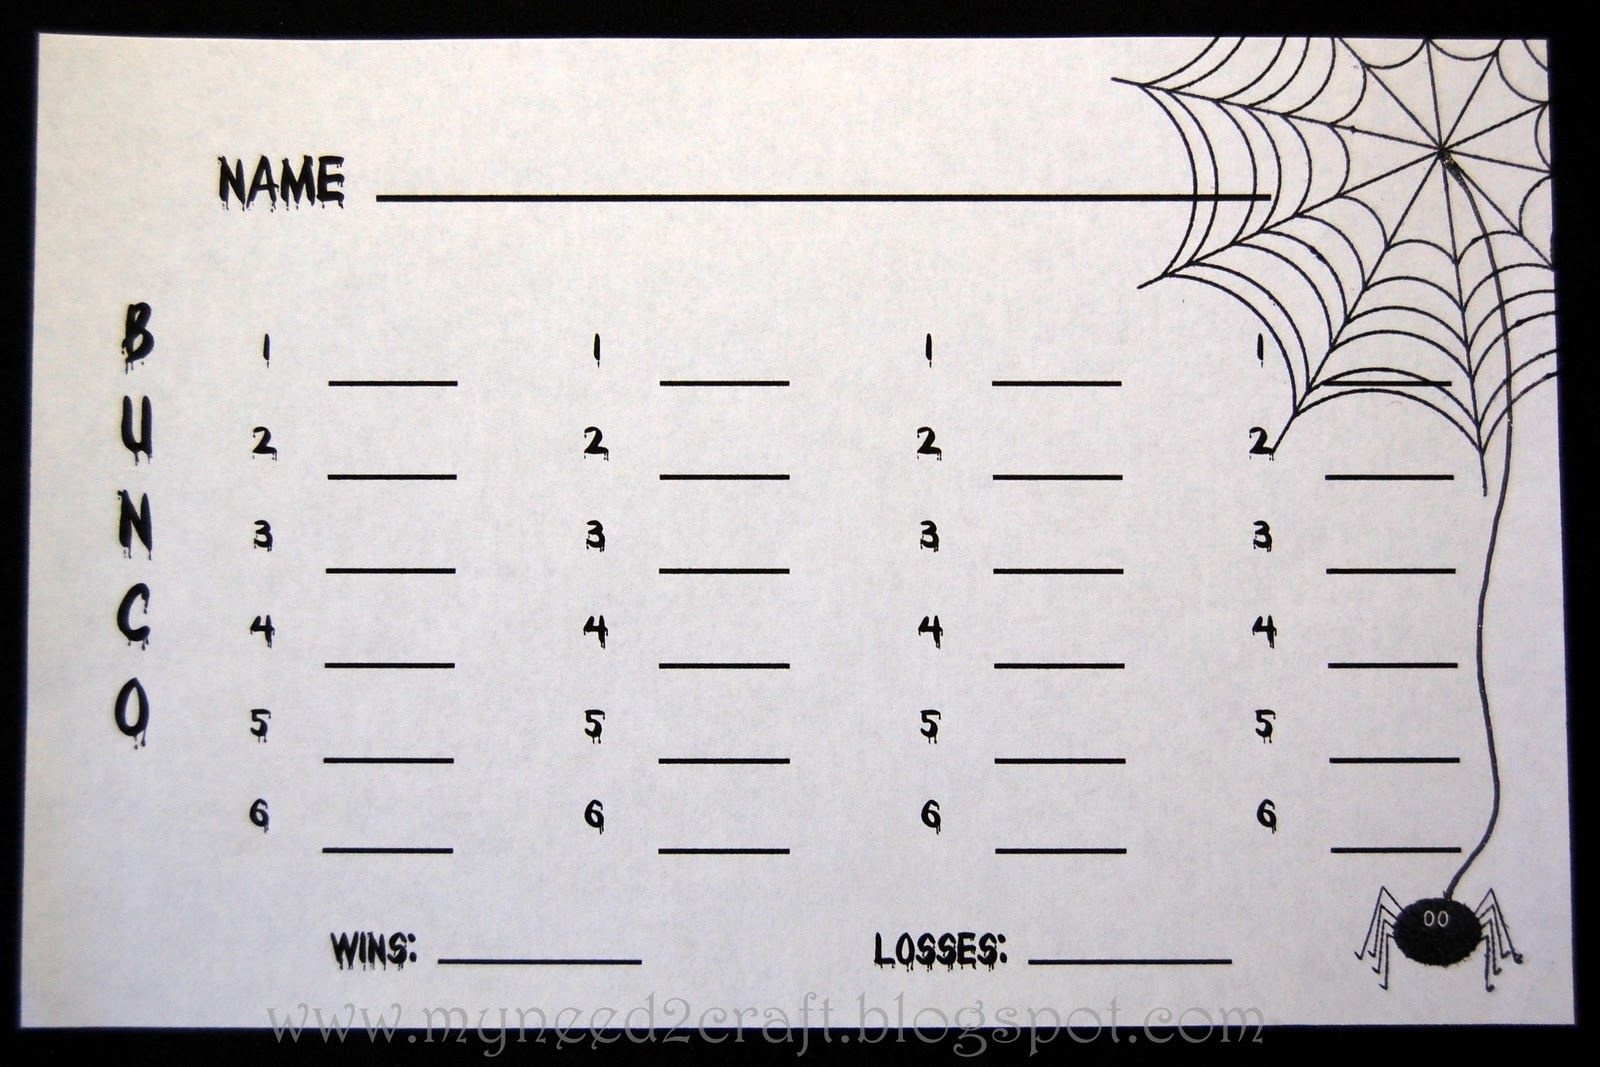 Bunco Score Sheets | The Bunco Score Sheets Using The Bloody Font - Free Printable Halloween Bunco Score Sheets